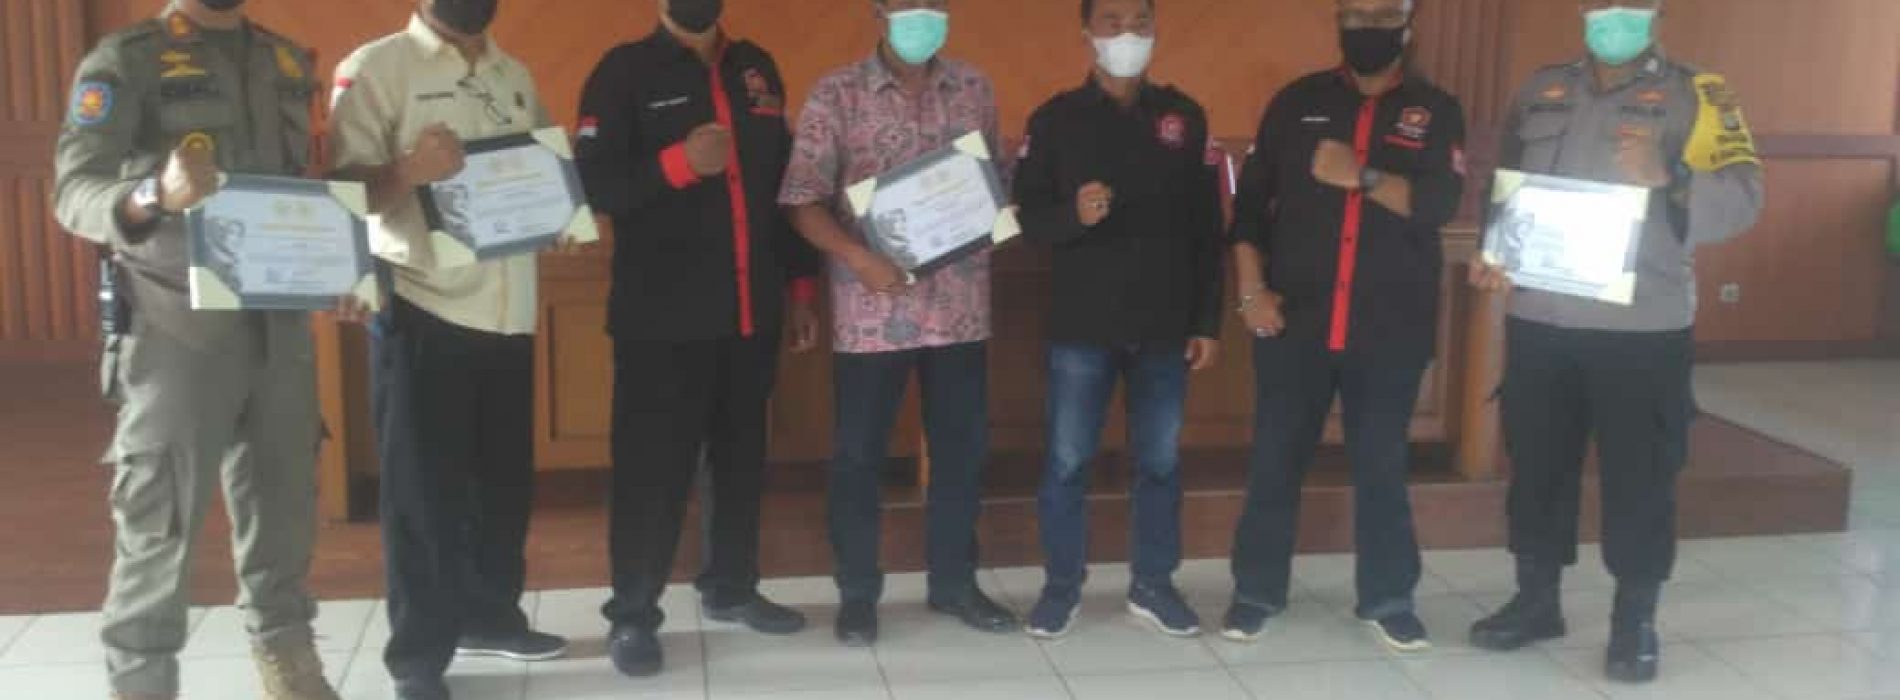 Wujud Apresiasi, Fahira Idris berikan Piagam Penghargaan DPD RI pada Para Gugus Tugas Pencegahan Pandemi Covid-19 di Semper Barat Cilincing Jakarta Utara.